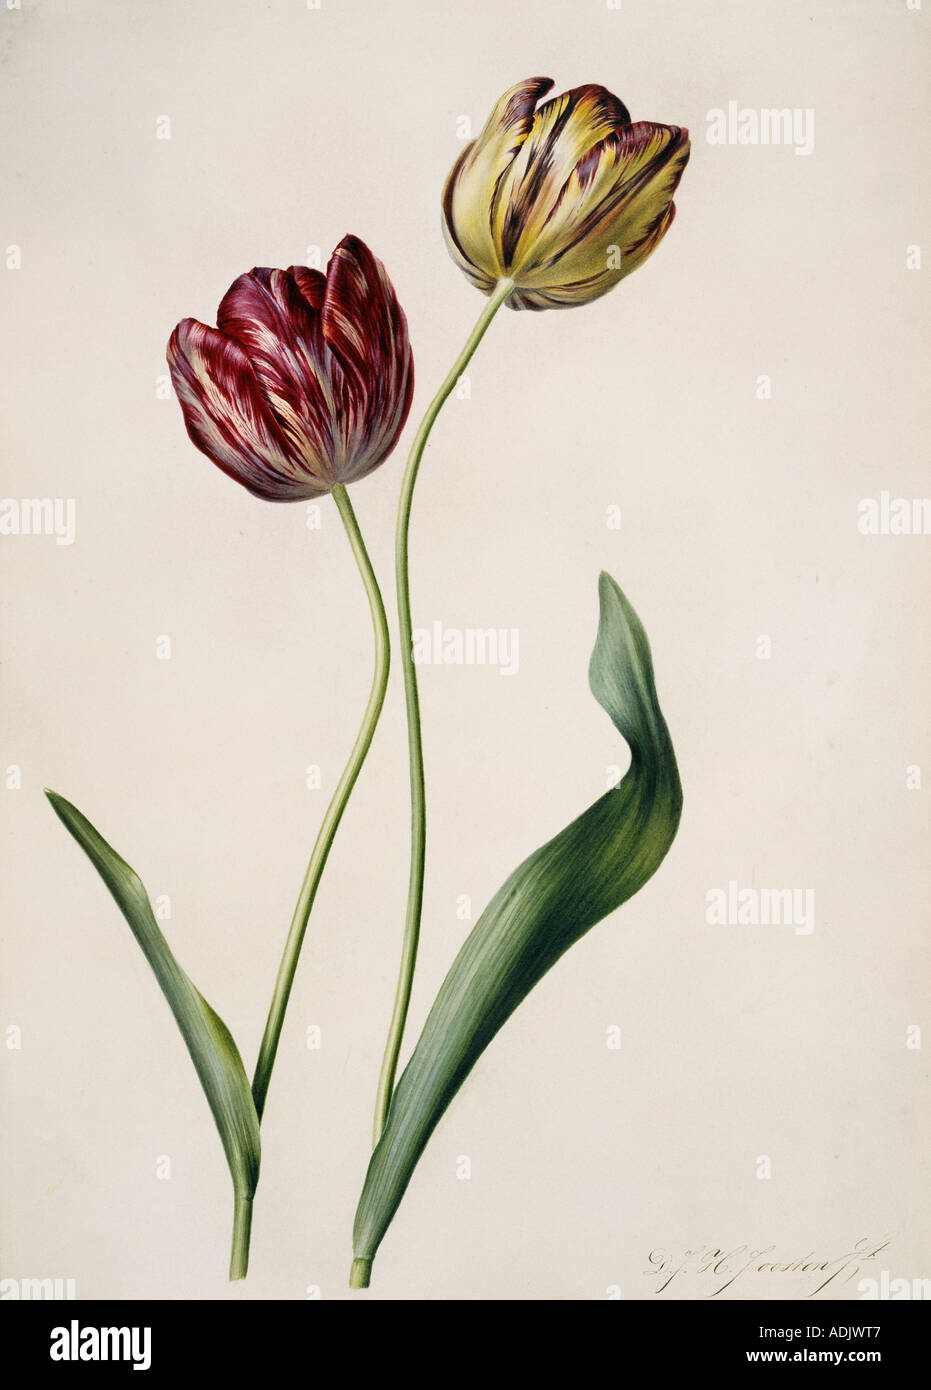 Tulipa gesneriana tulip Stock Photo